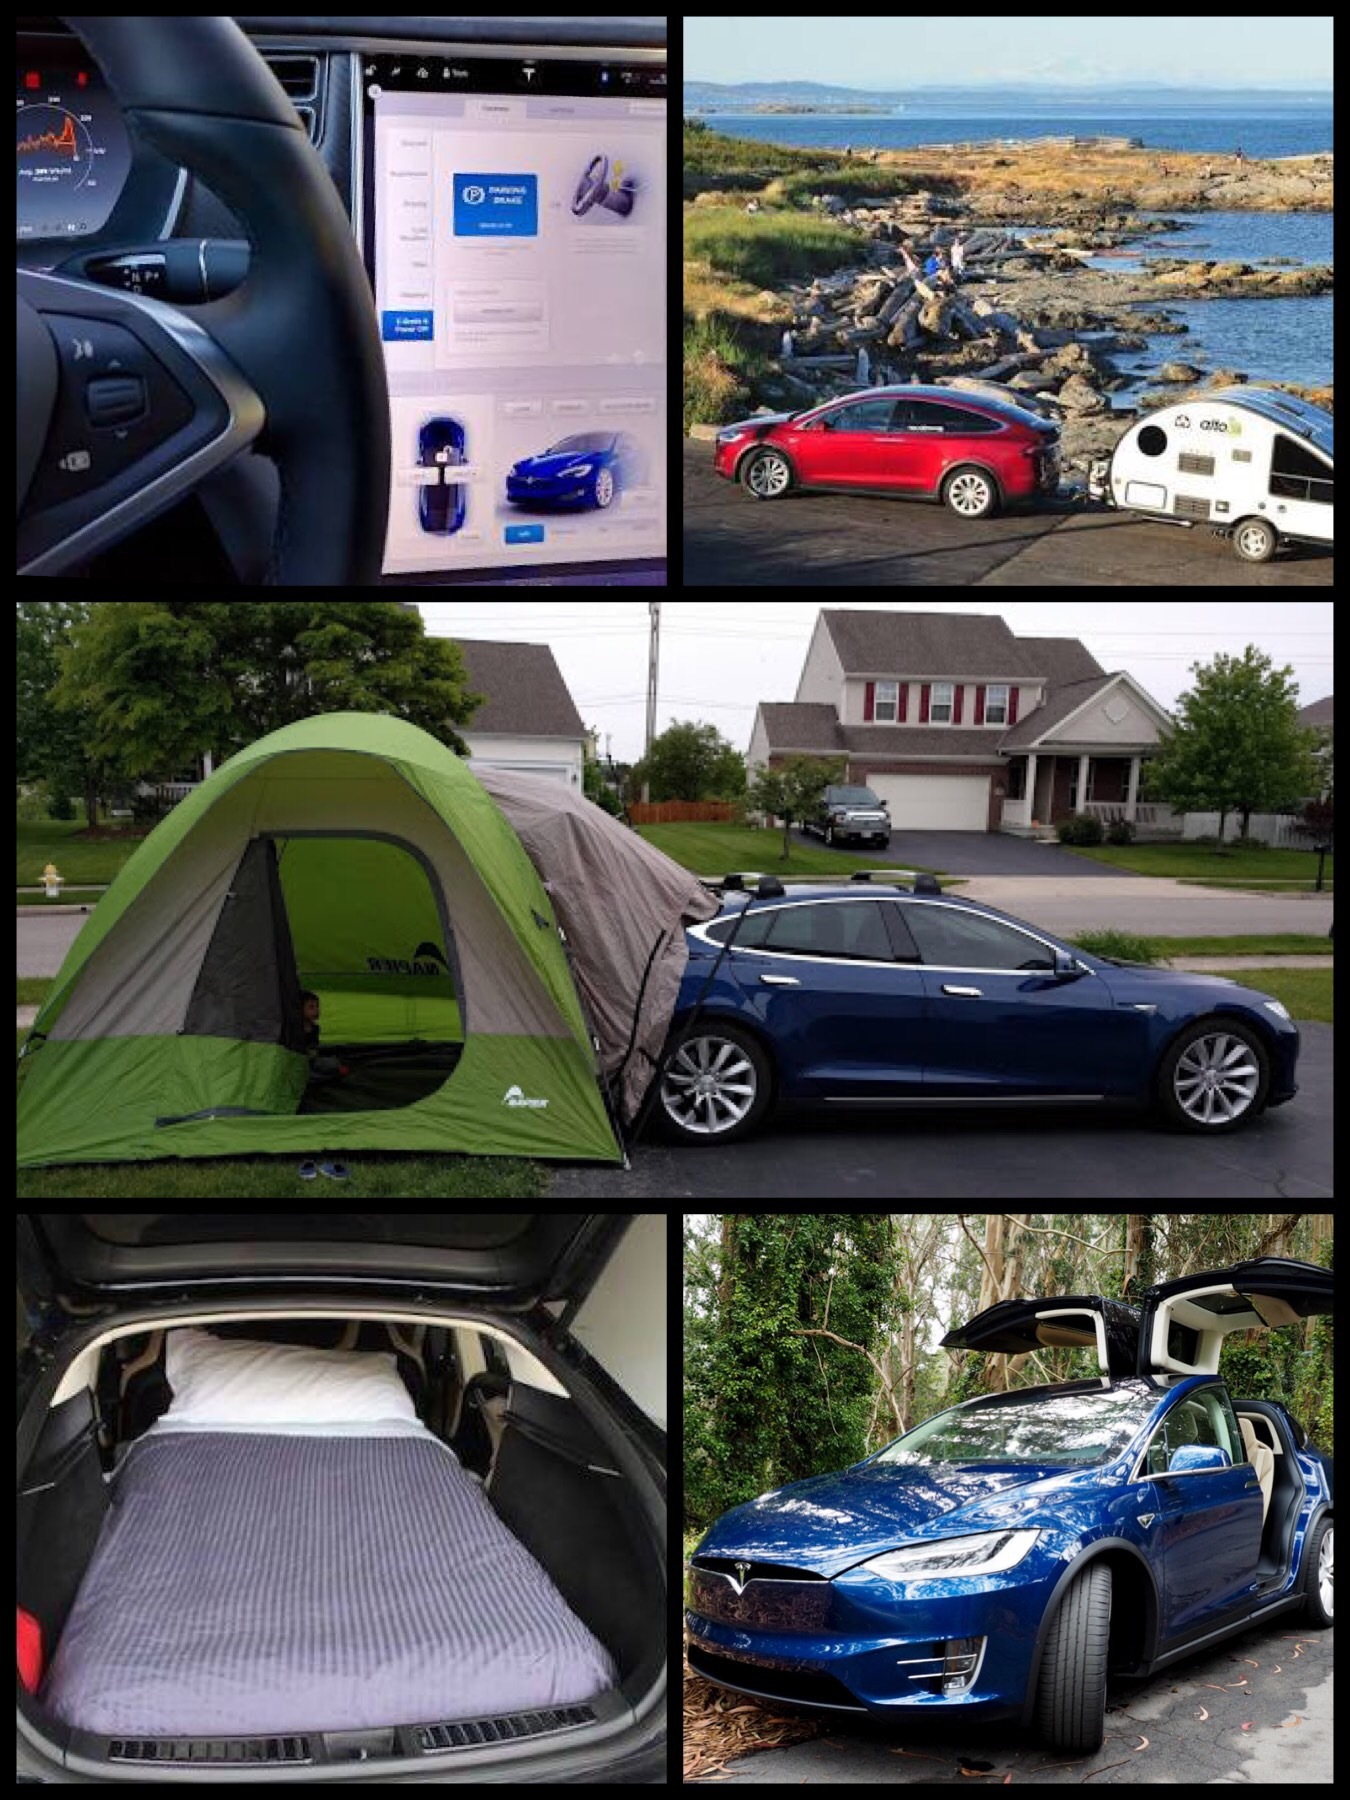 Tesla is party & camp modeテスラ パーティアンドキャンプモード